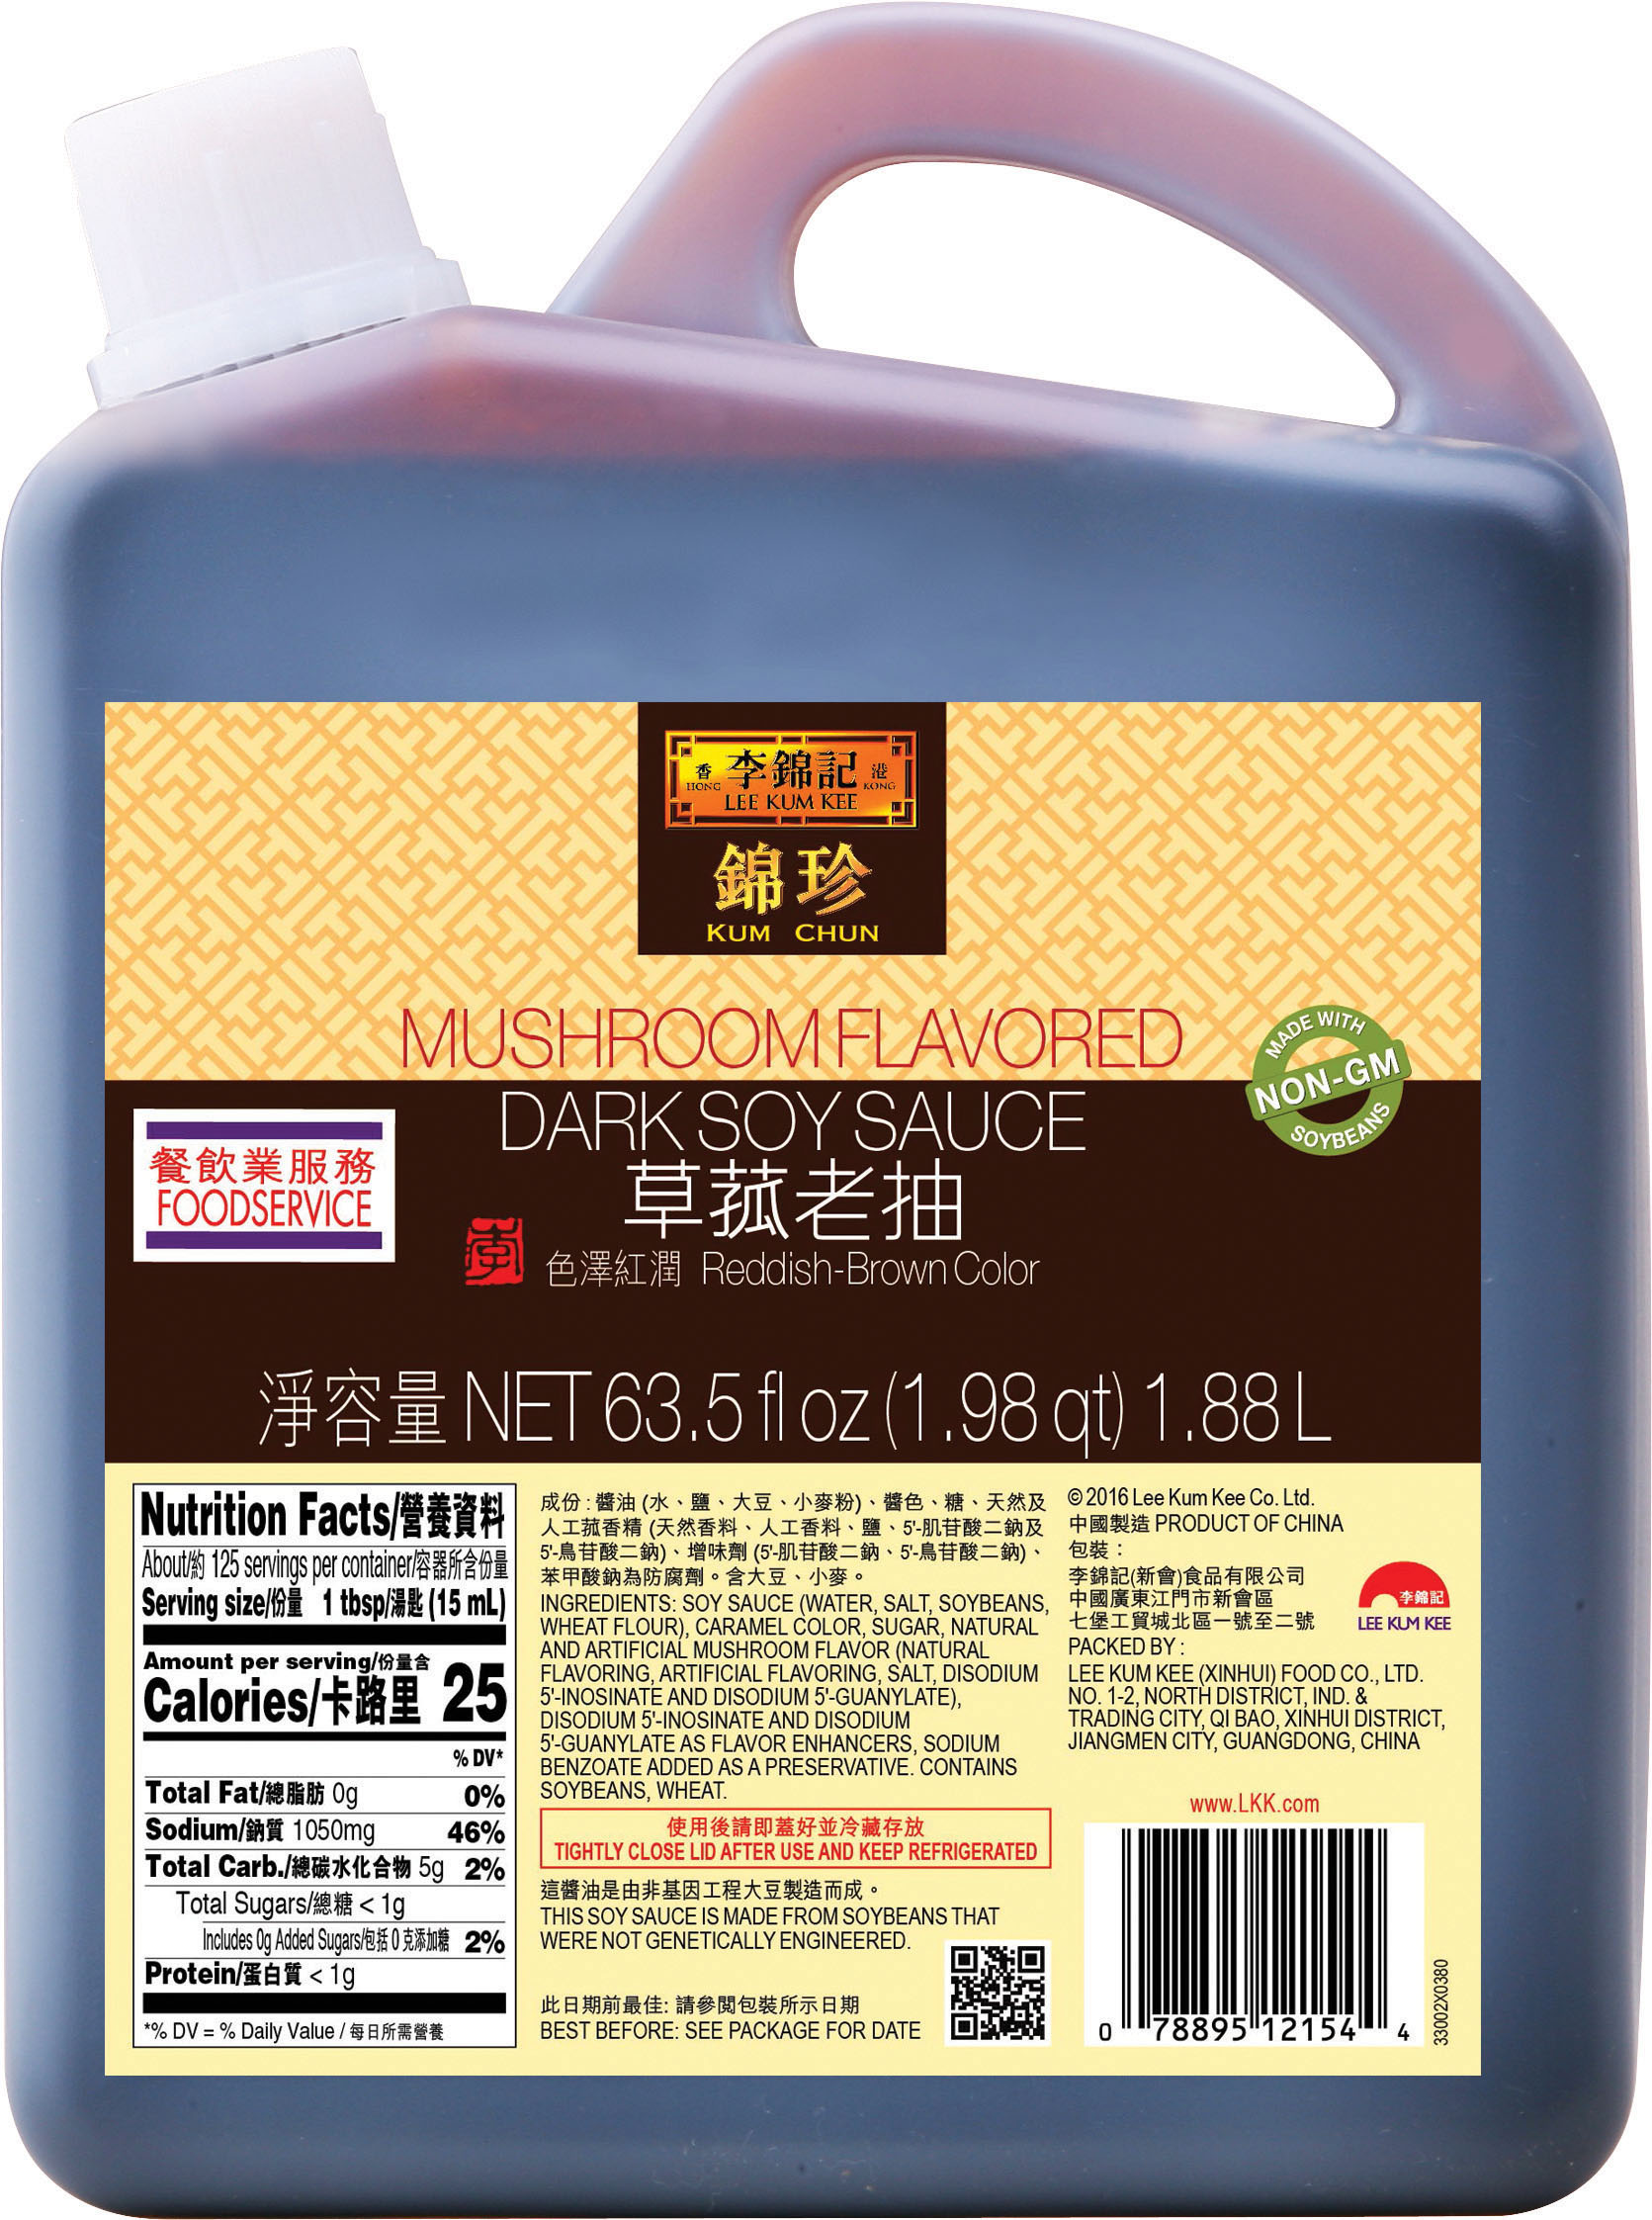 Mushroom Flavored Dark Soy Sauce 635oz 188L 875in